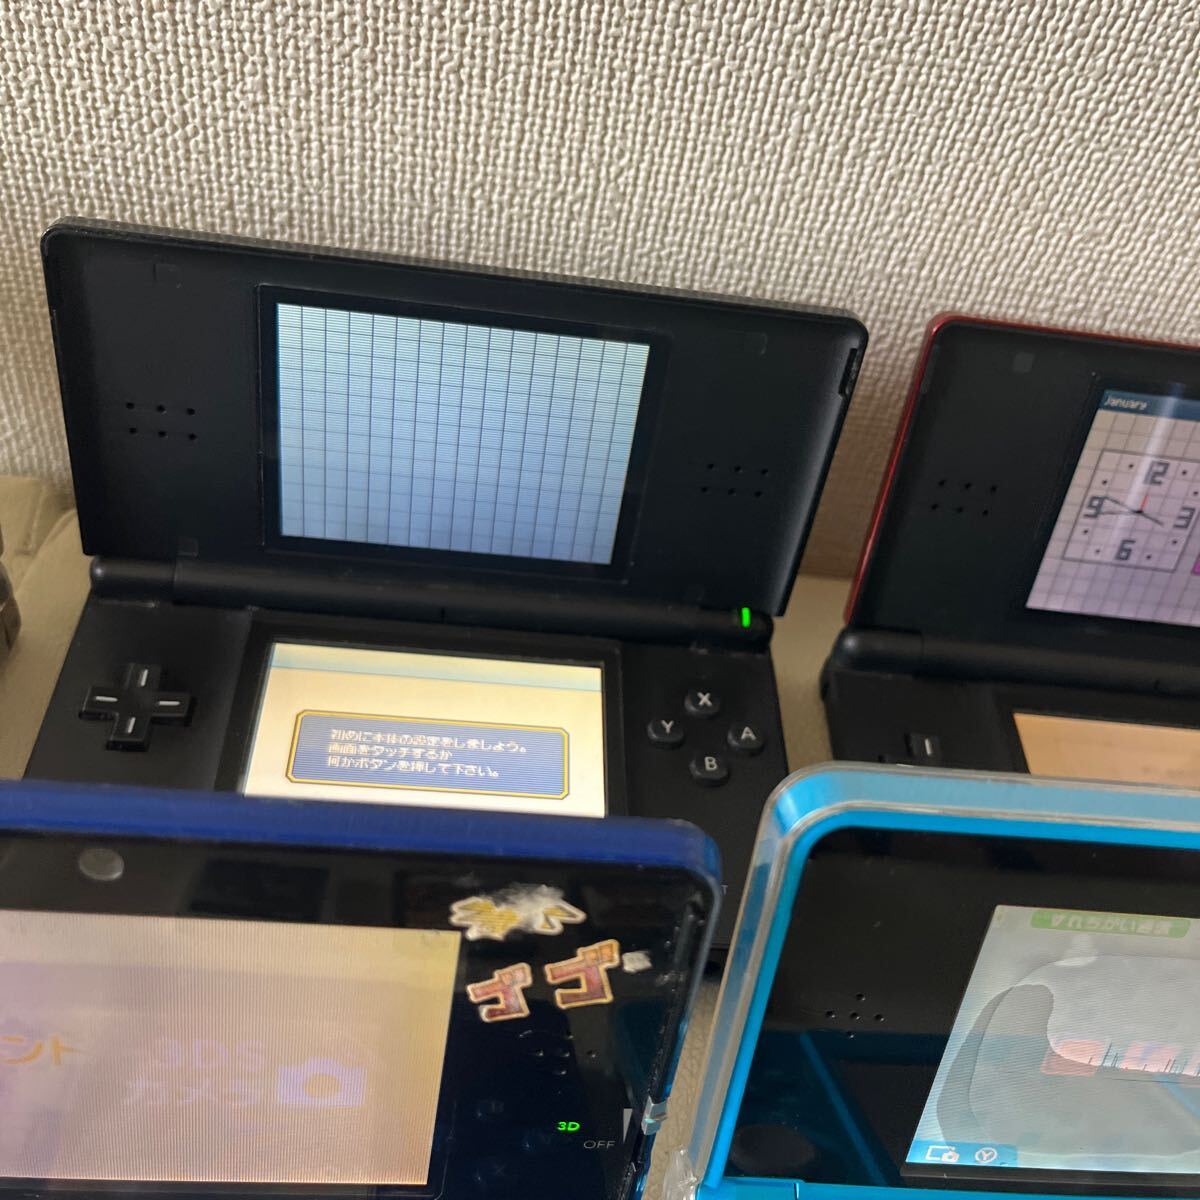  nintendo Nintendo DS light 3DS body soft summarize operation not yet verification junk 